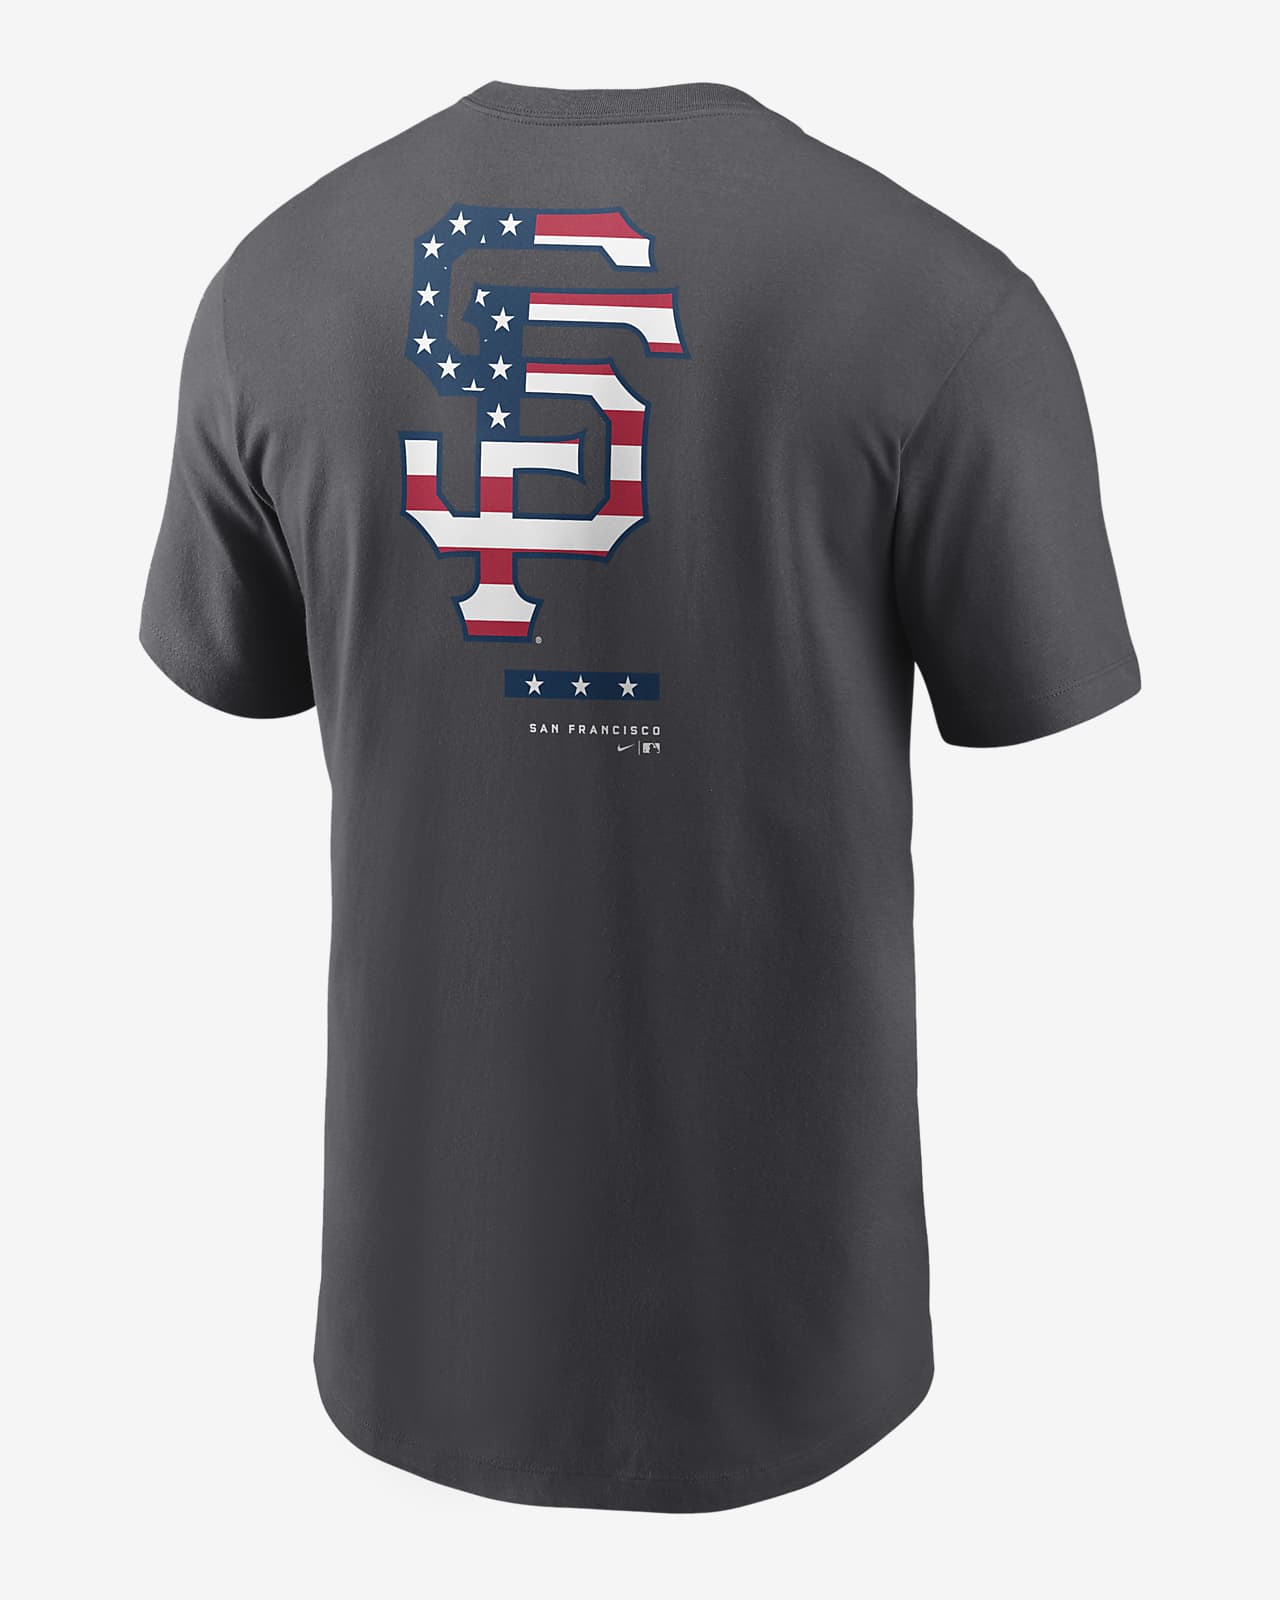 San Francisco Giants Americana Men's Nike MLB T-Shirt.